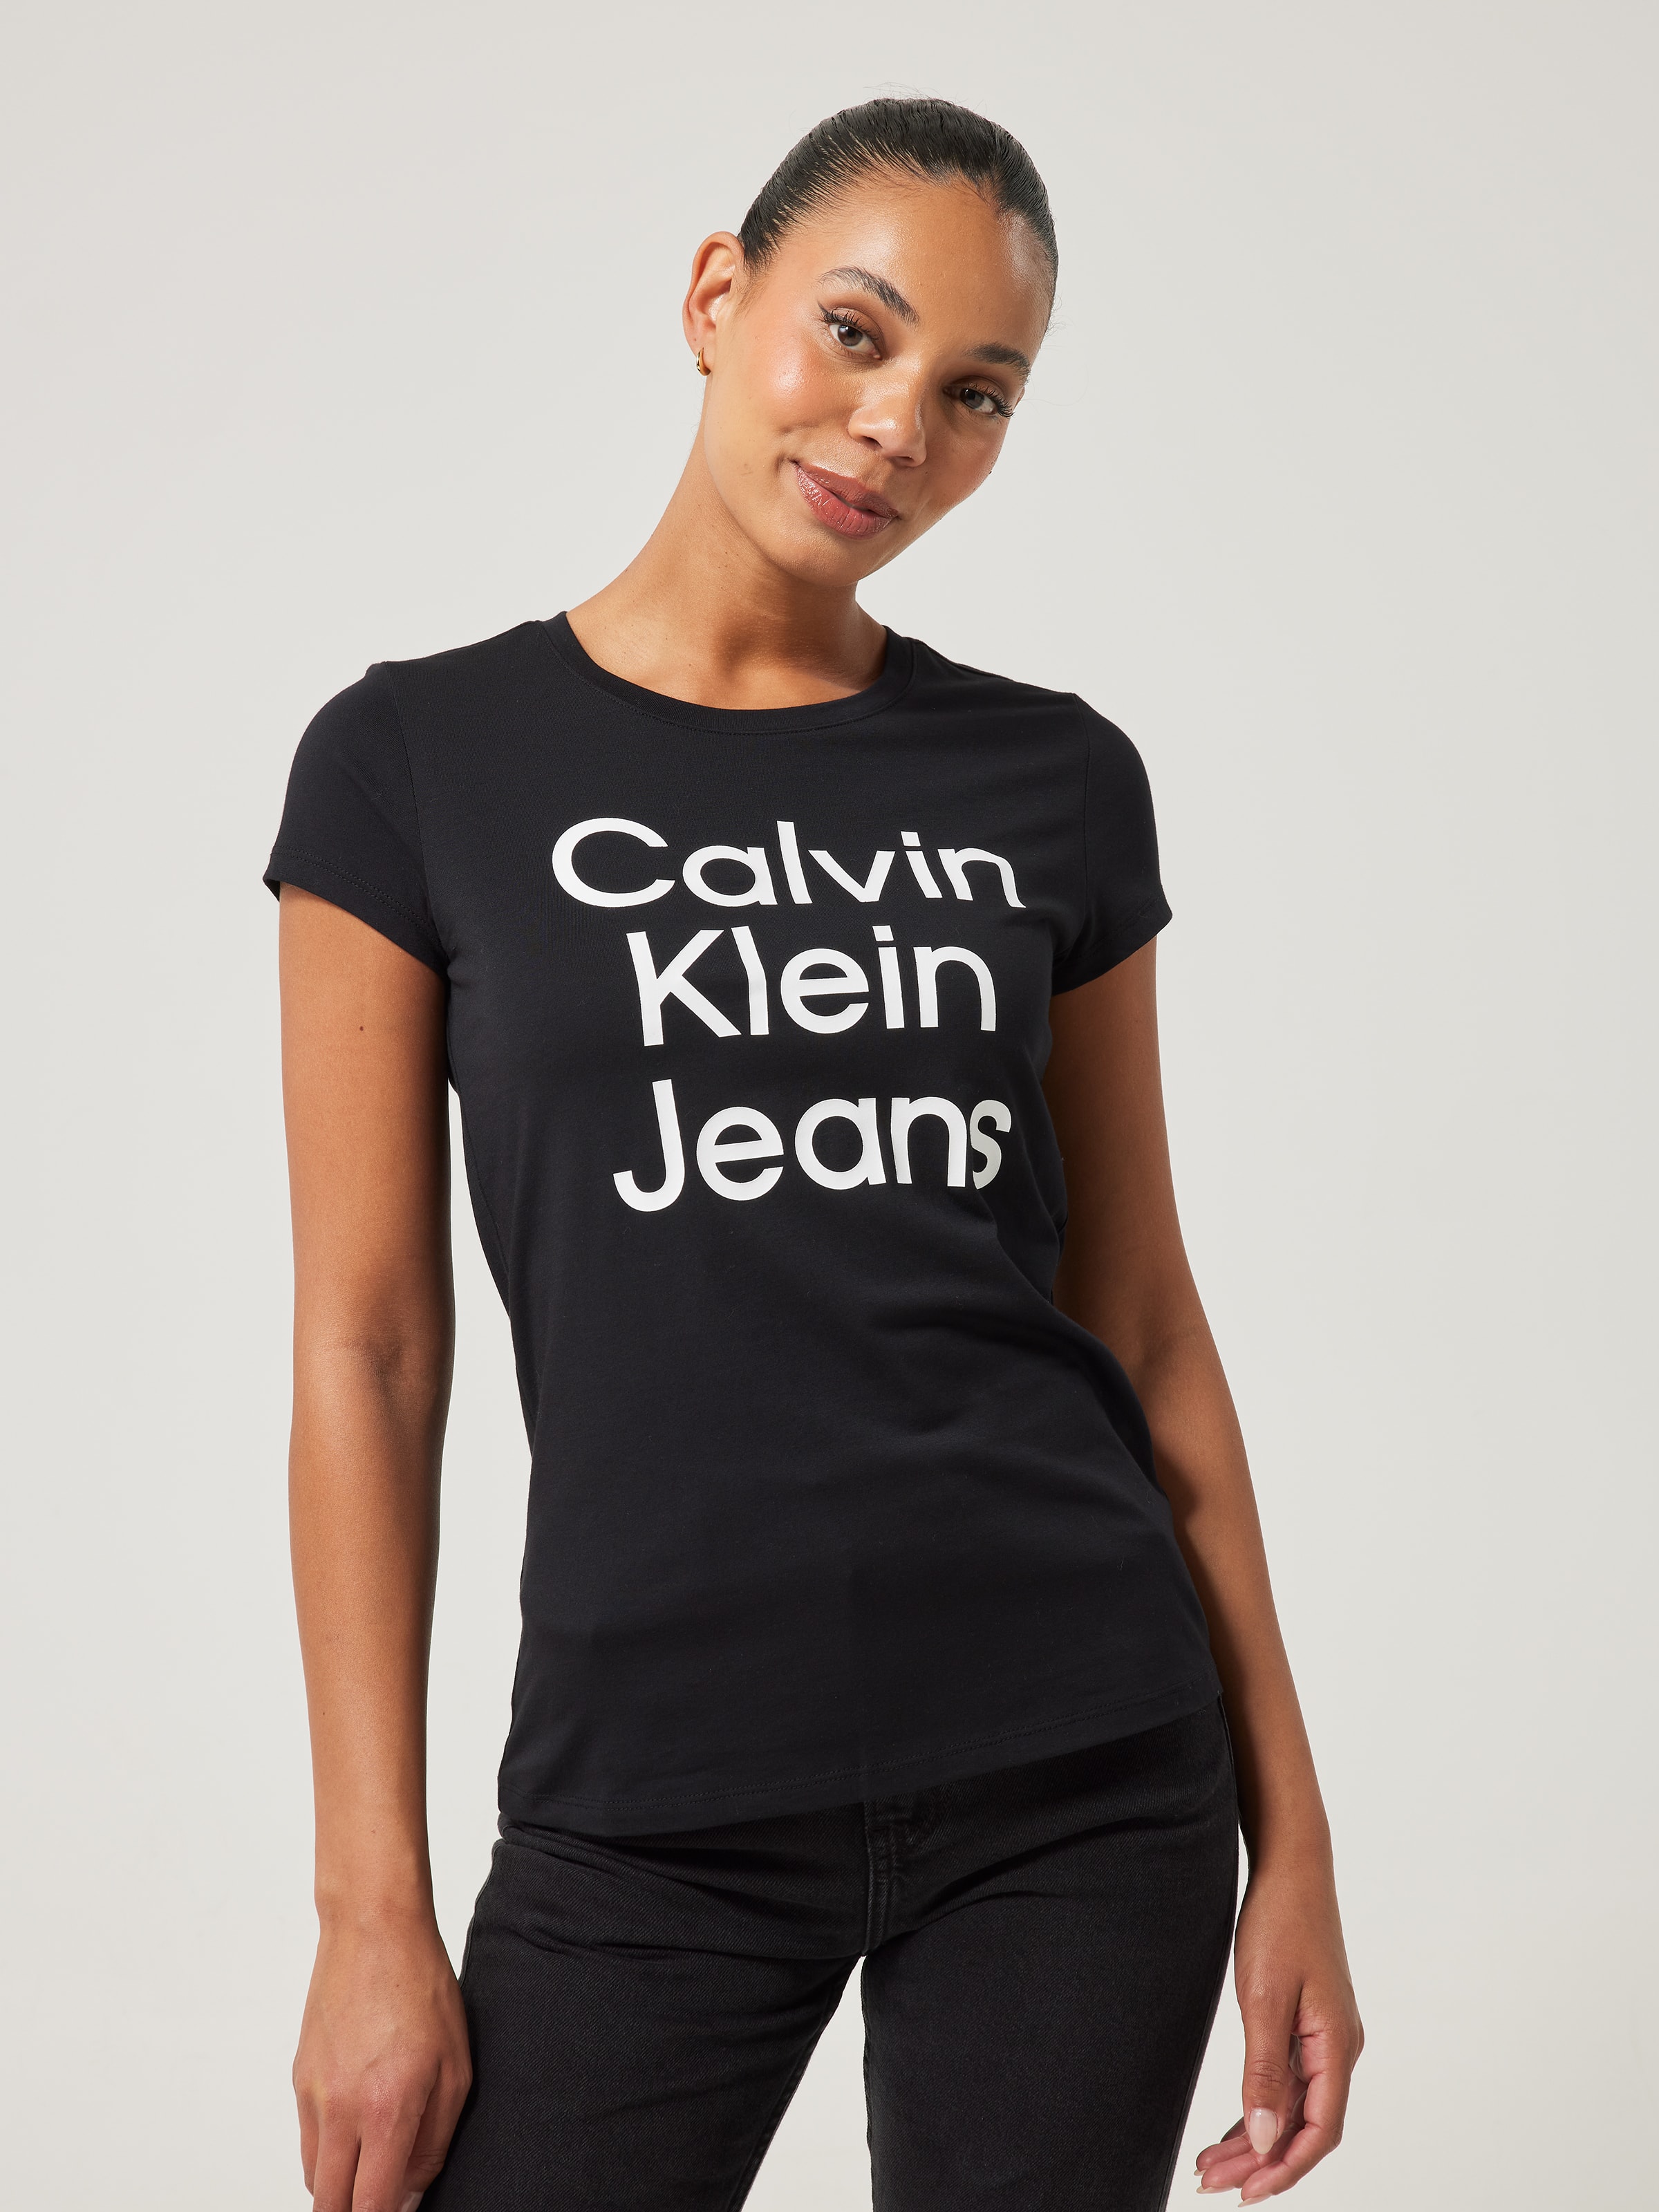 Shop Calvin Klein CALVIN KLEIN JEANS Casual Style Unisex Street